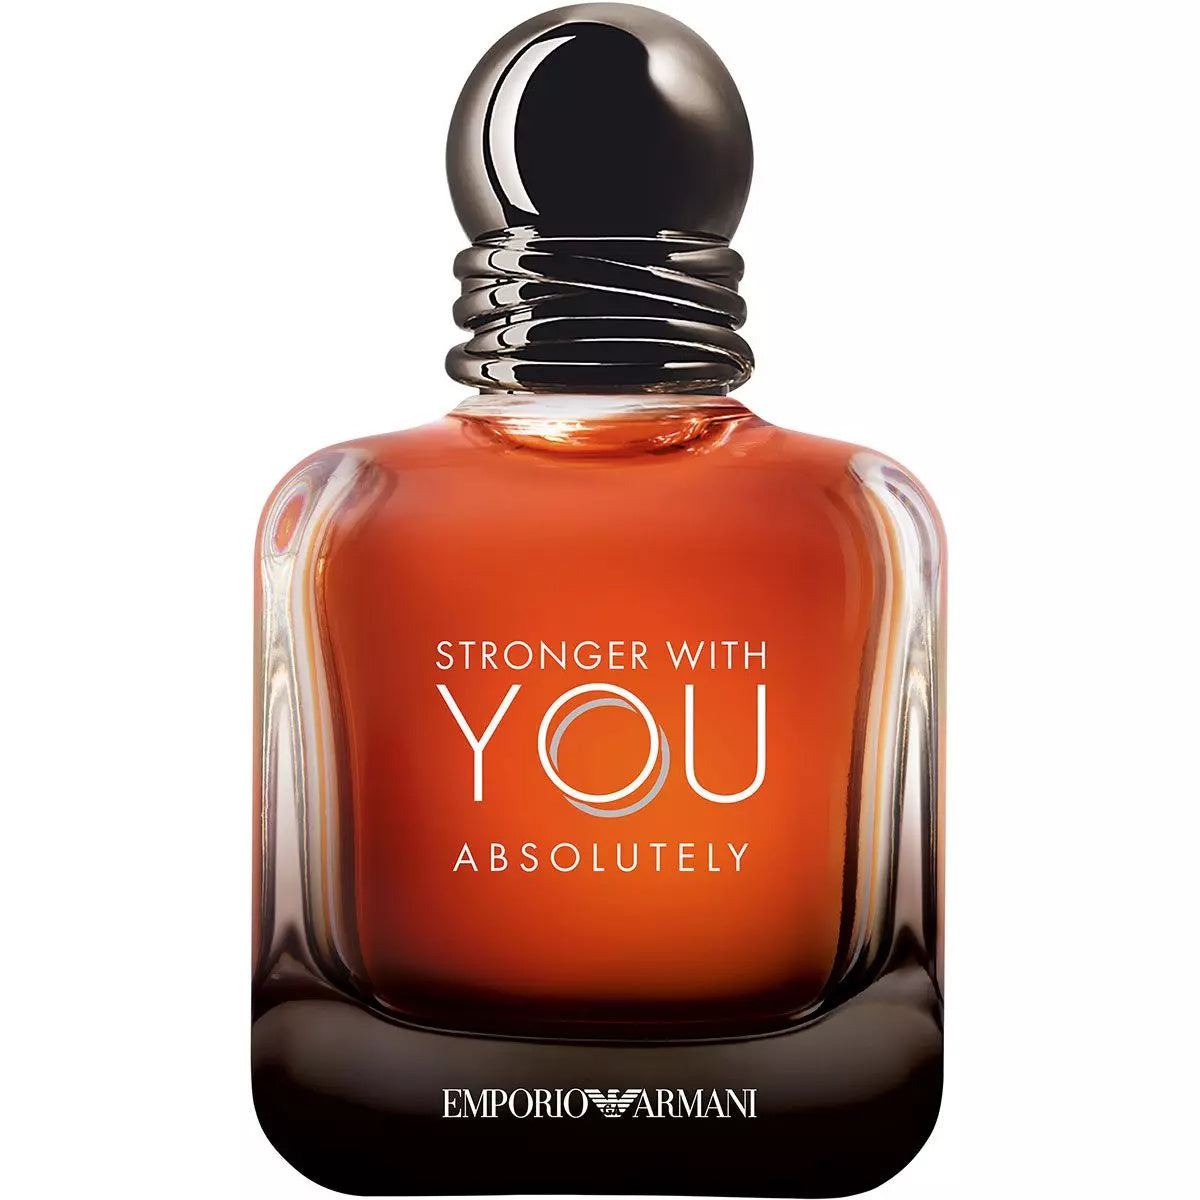 Stronger with You Absolutely Eau de Parfum